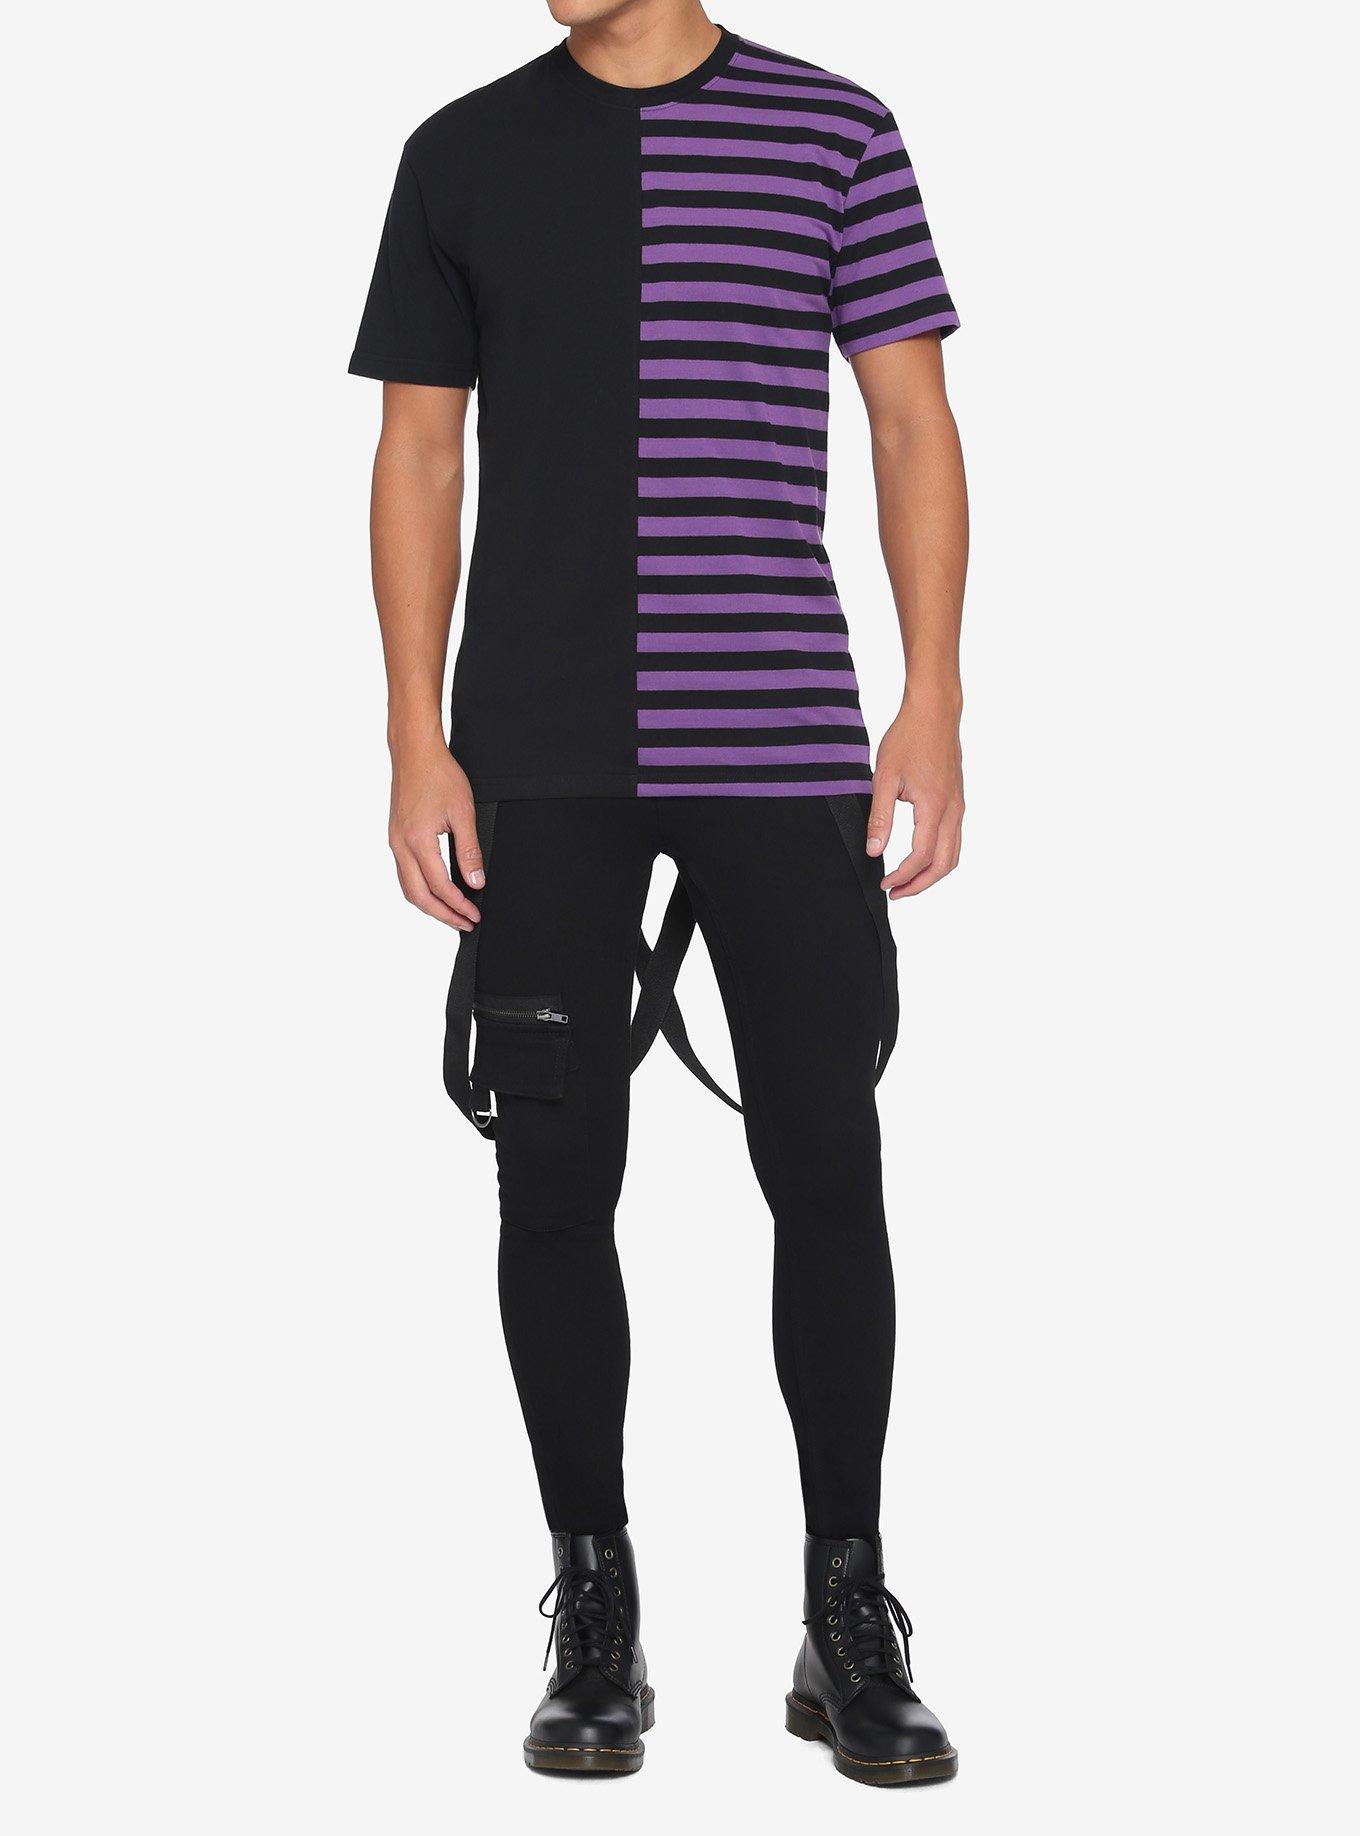 Purple & Black Stripe Split T-Shirt, STRIPE - PURPLE, alternate